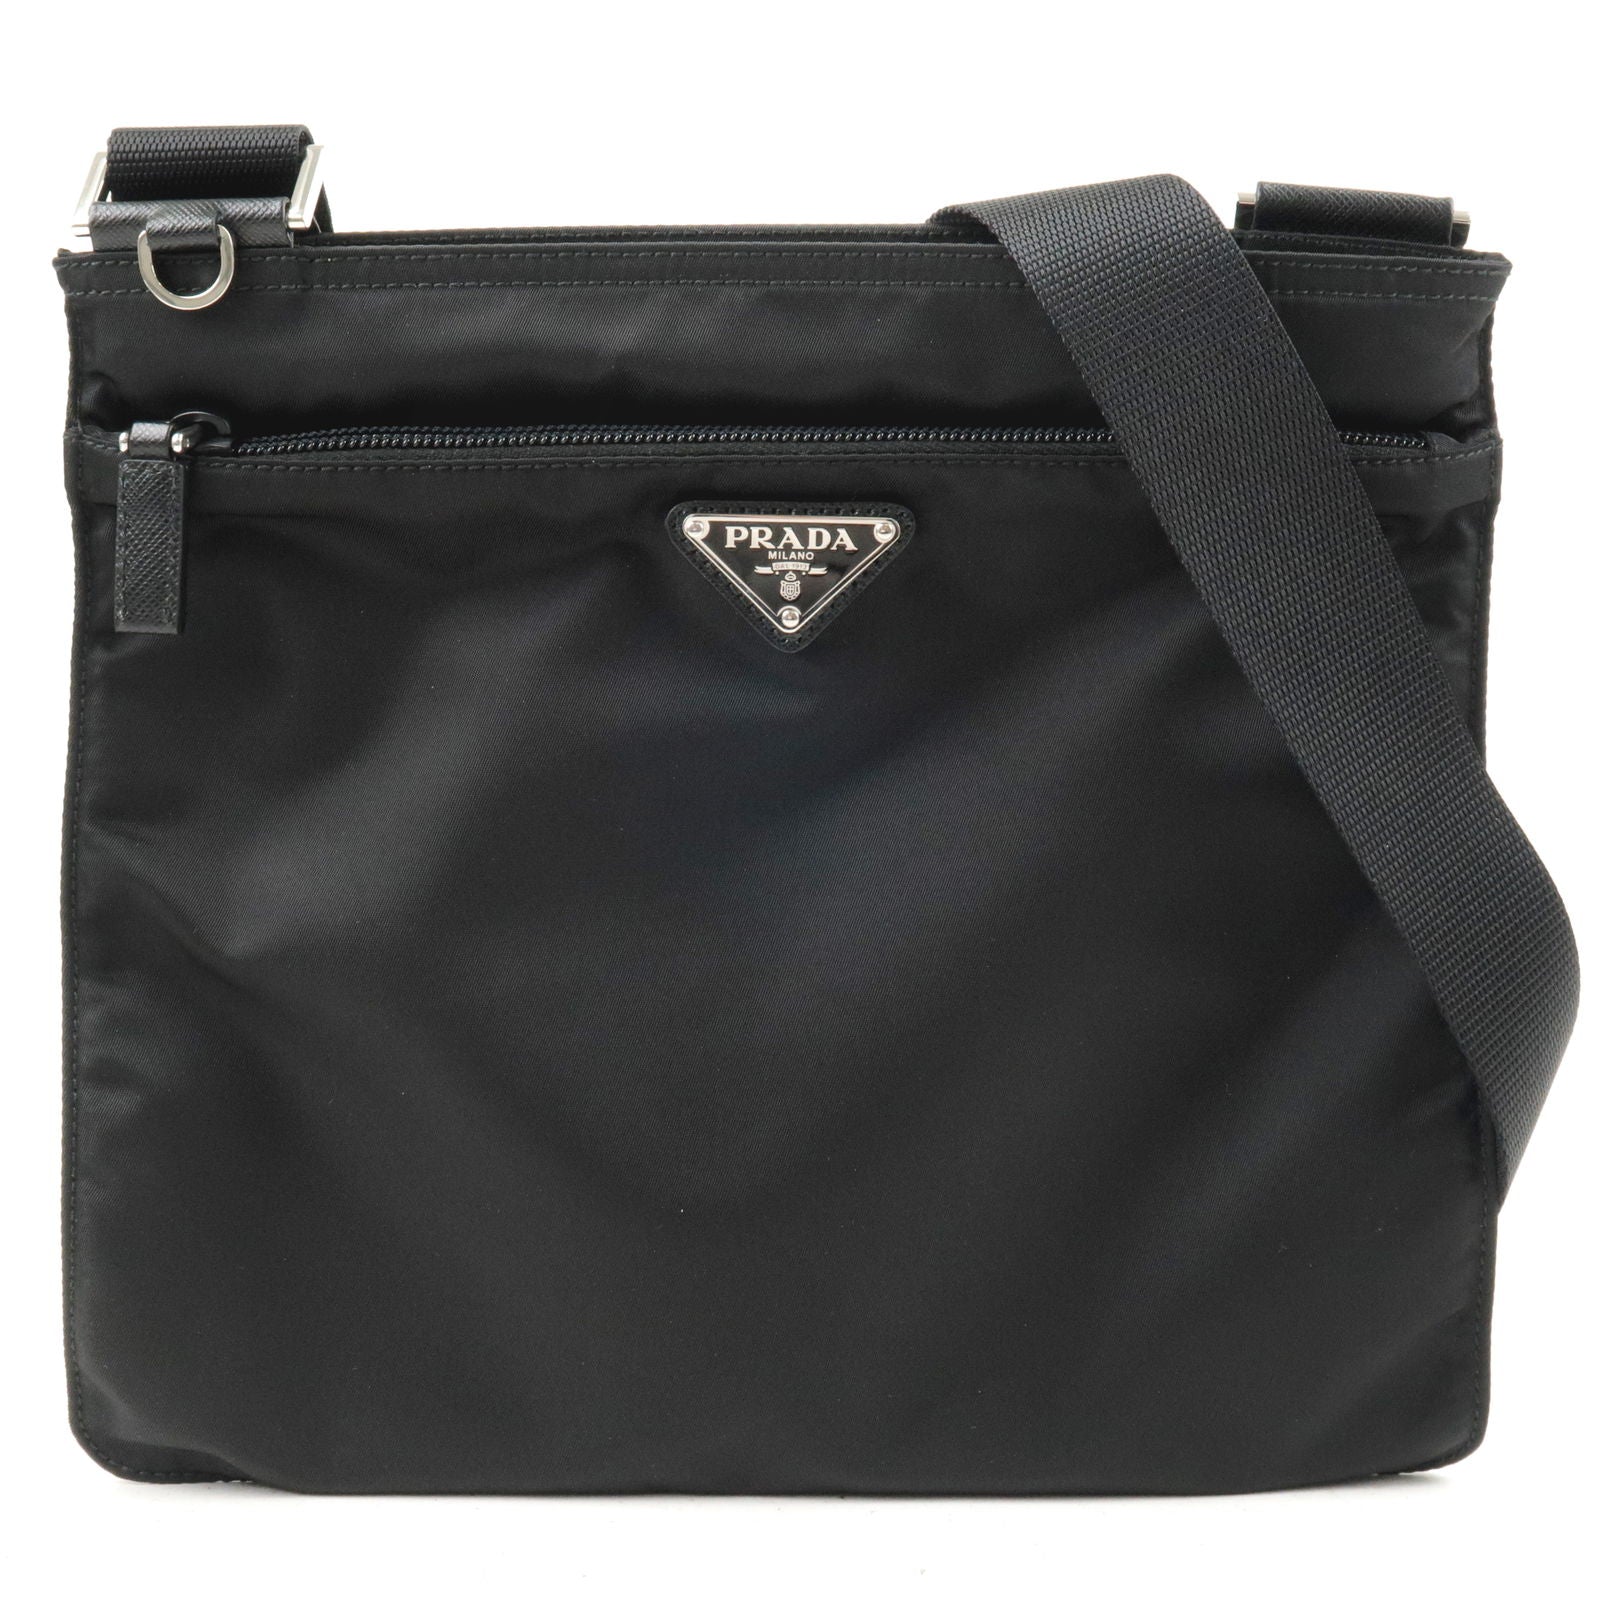 PRADA Embossed Logo Leather Boston bag Handbag Beige Vintage Old